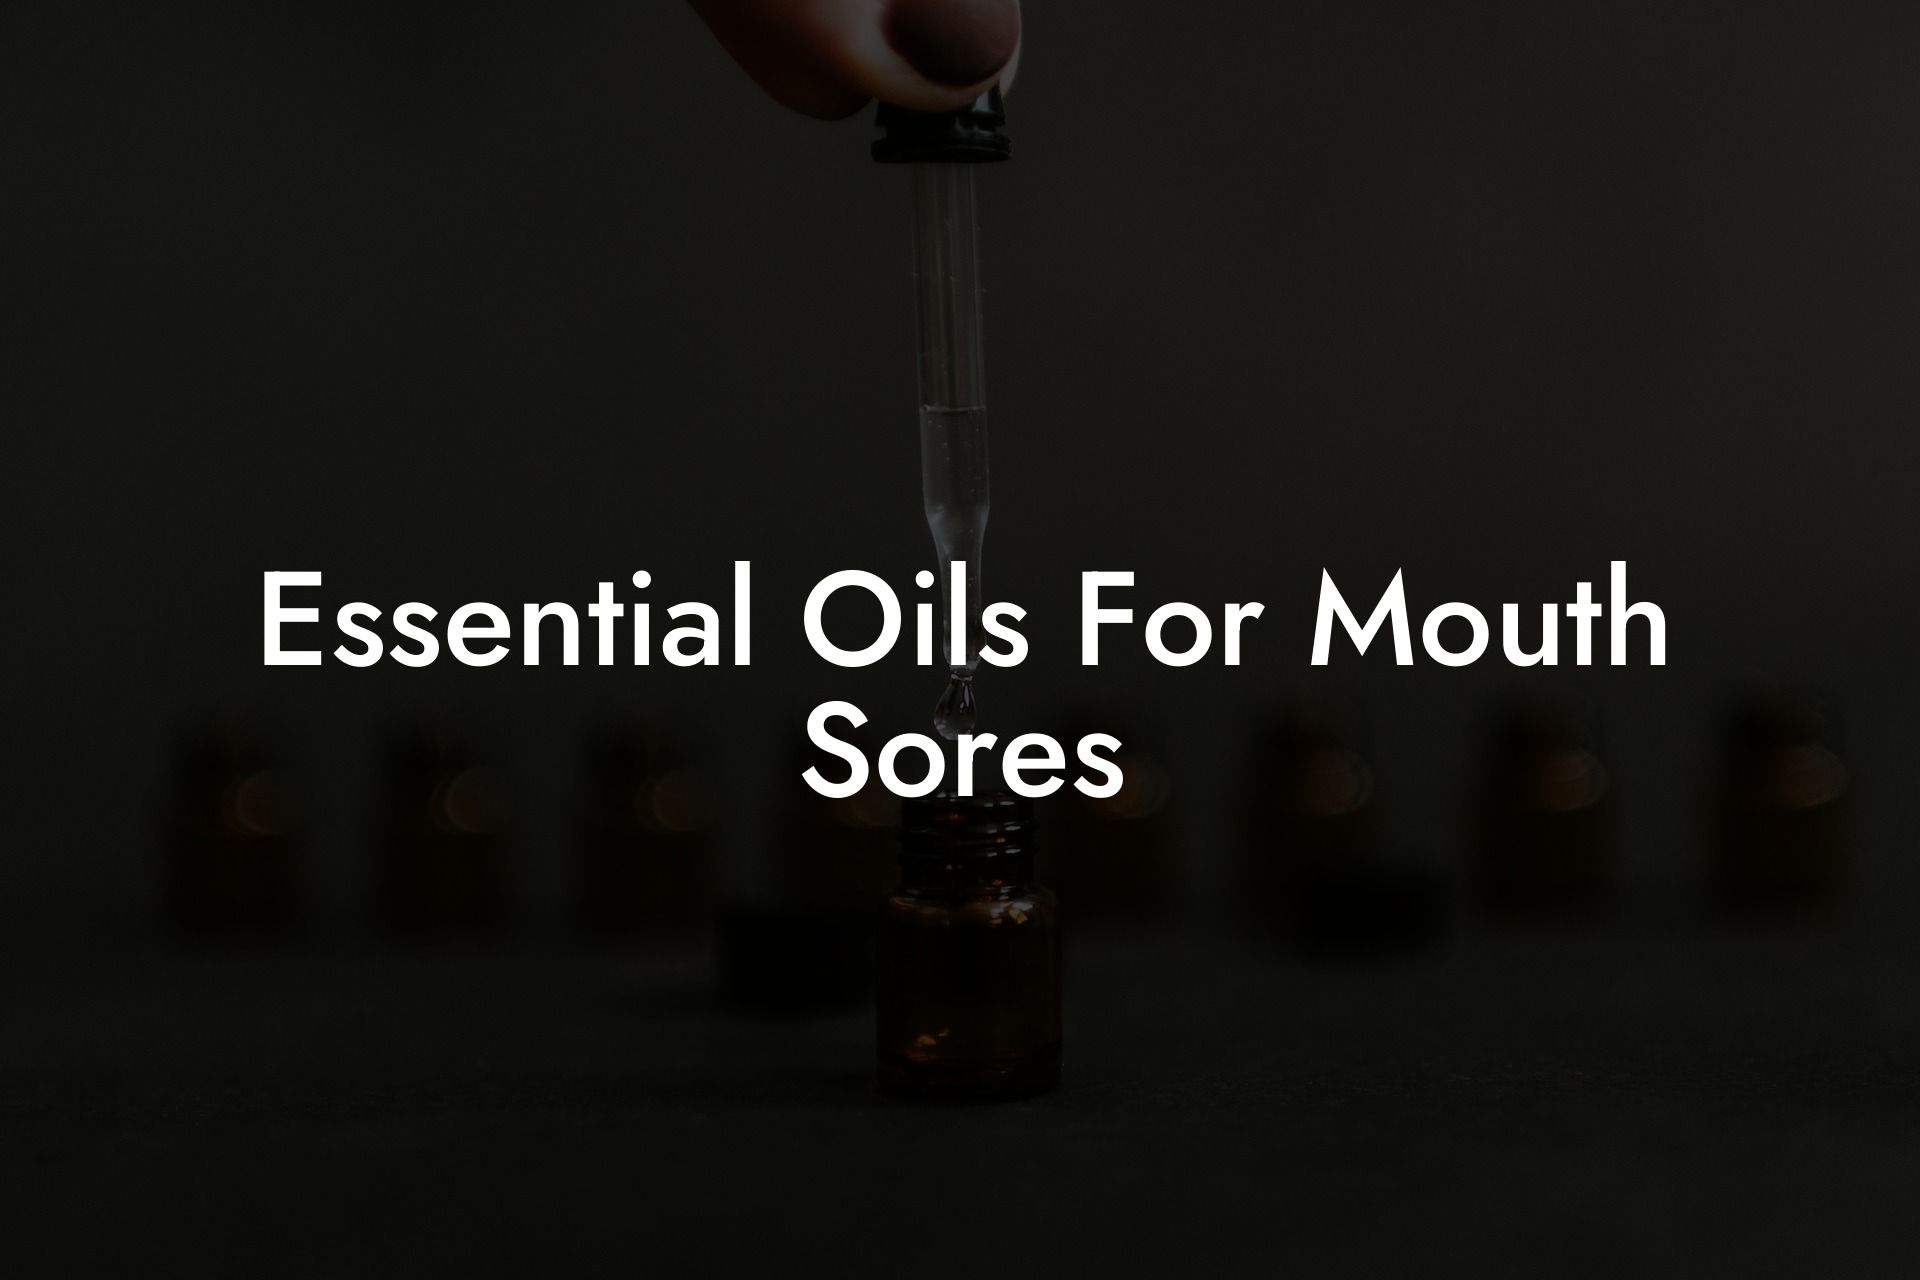 Essential Oils For Mouth Sores